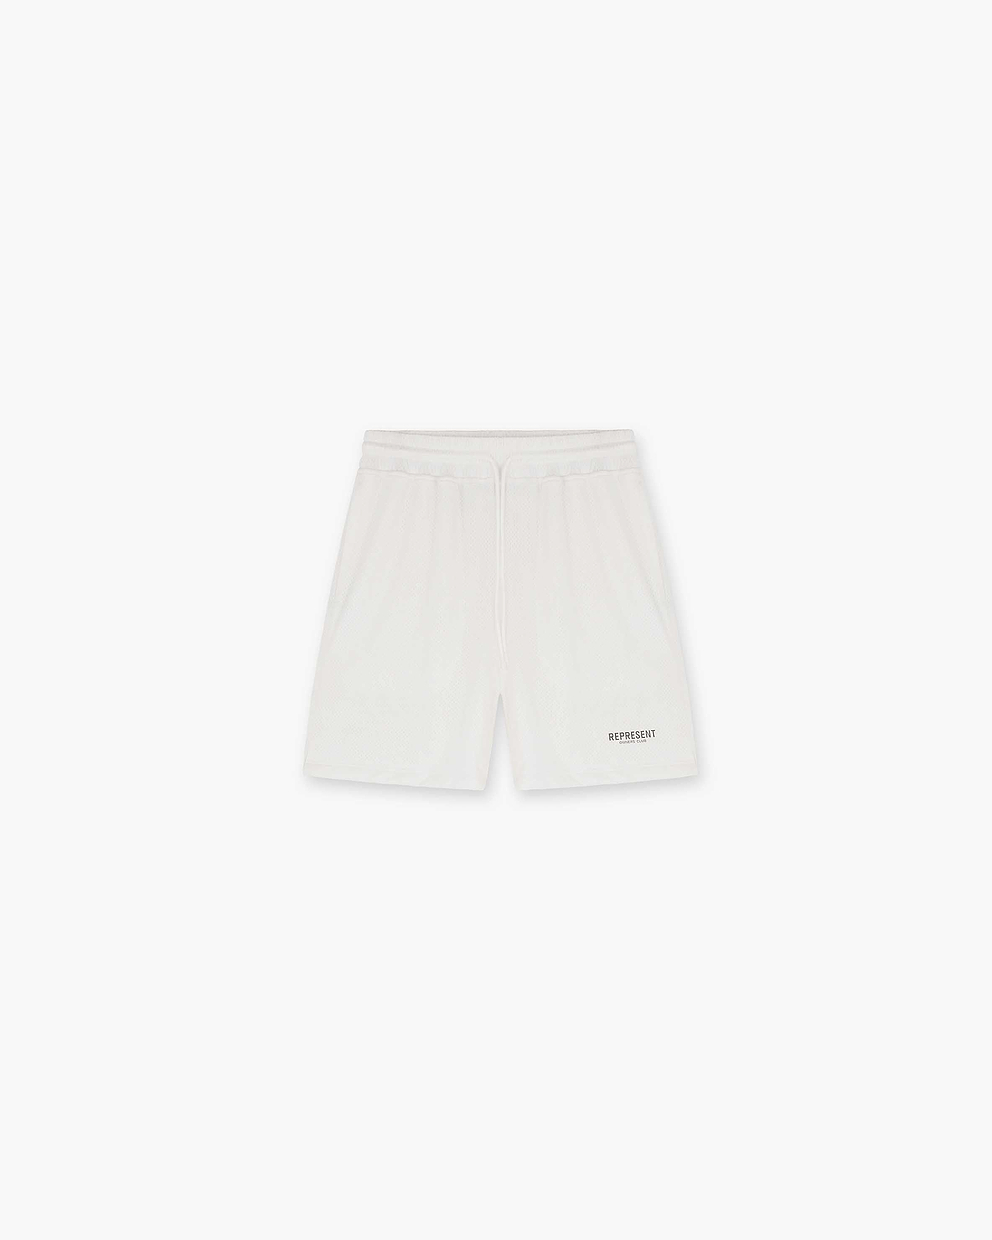 Represent Owners Club Mesh Shorts - Flat White